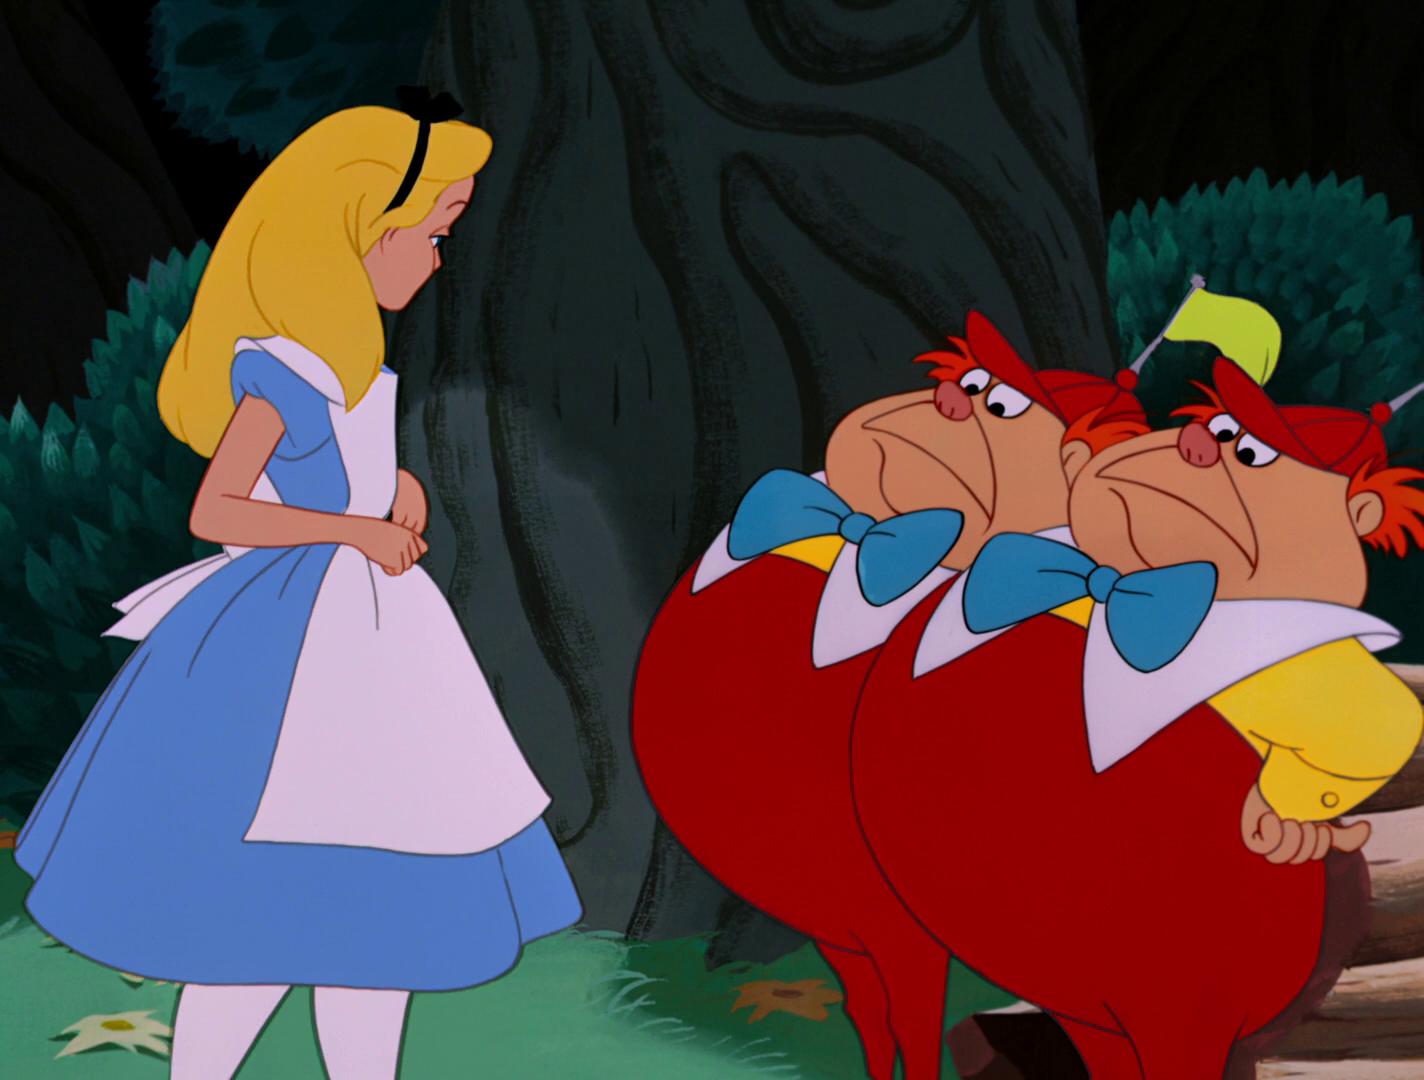 Alice in Wonderland free download